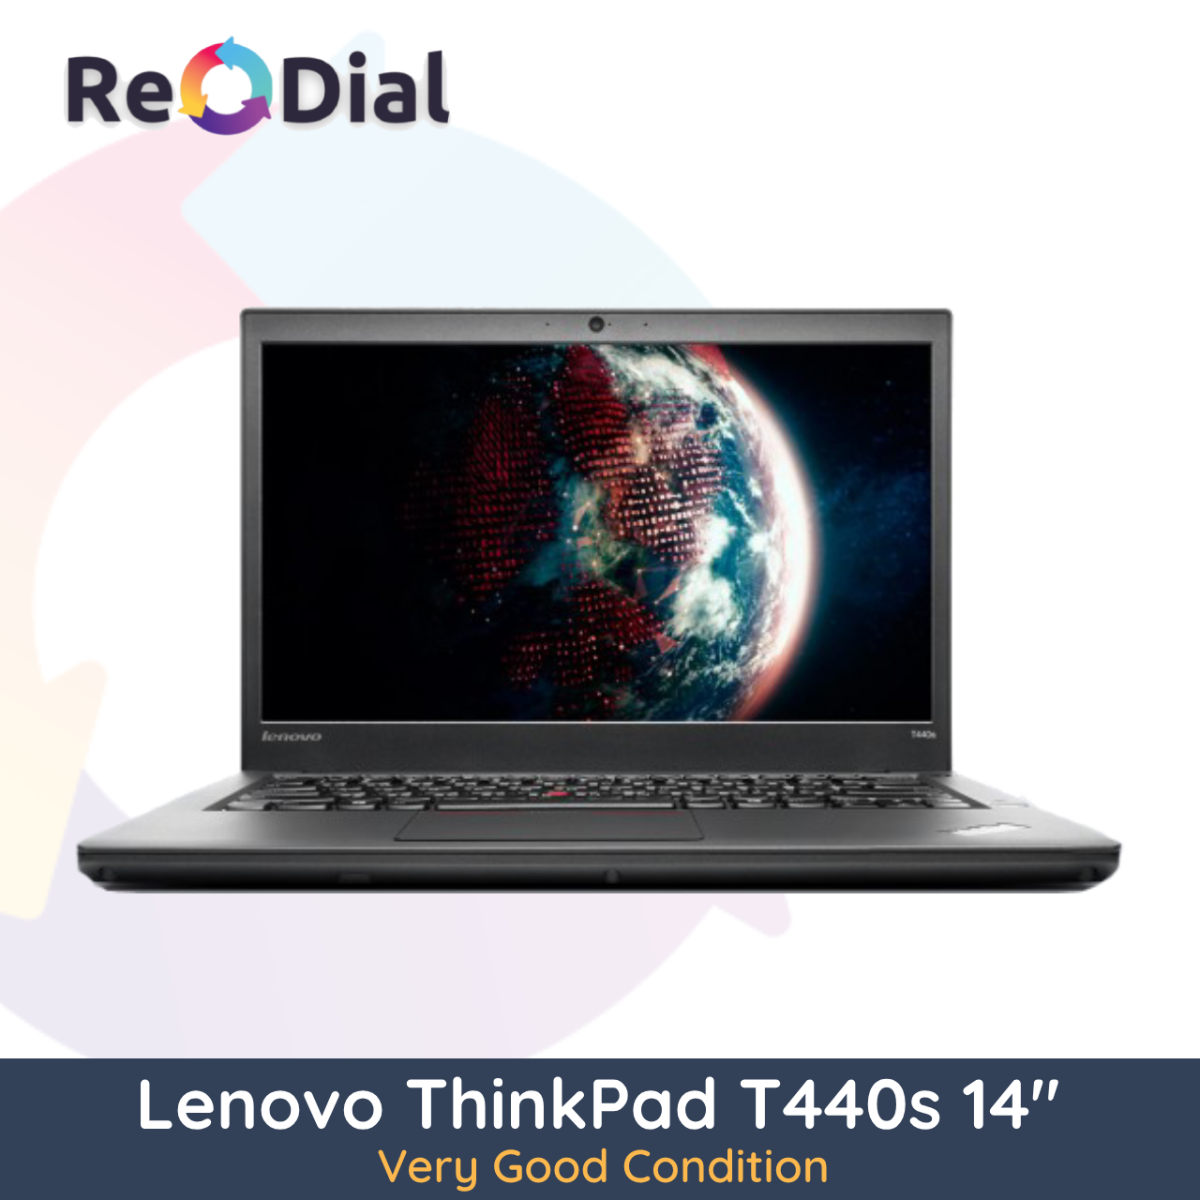 Lenovo ThinkPad T440s 14" Laptop i5-4300U 128GB 4GB RAM - Very Good Condition